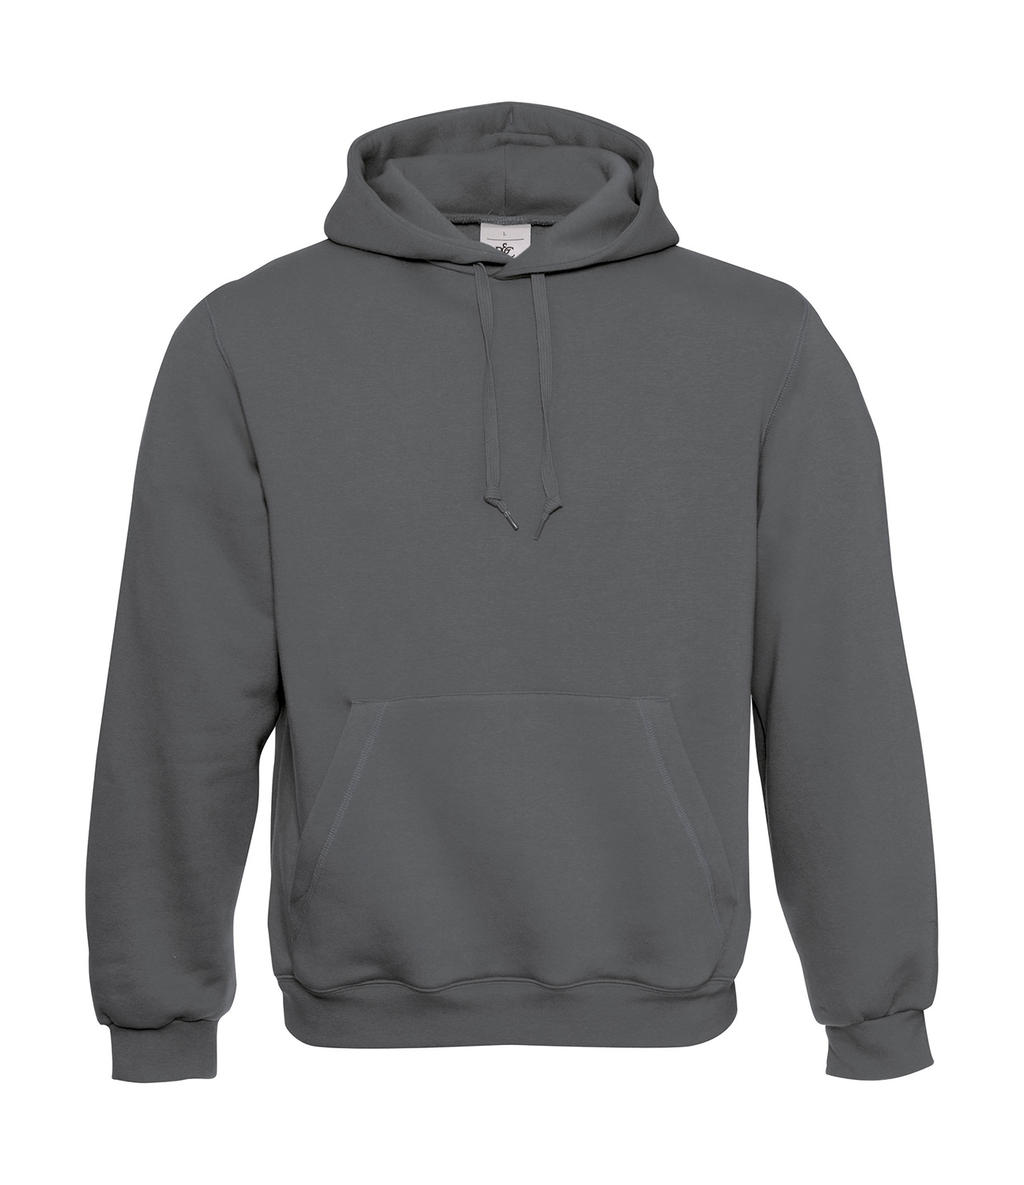  Hooded Sweatshirt in Farbe Steel Grey